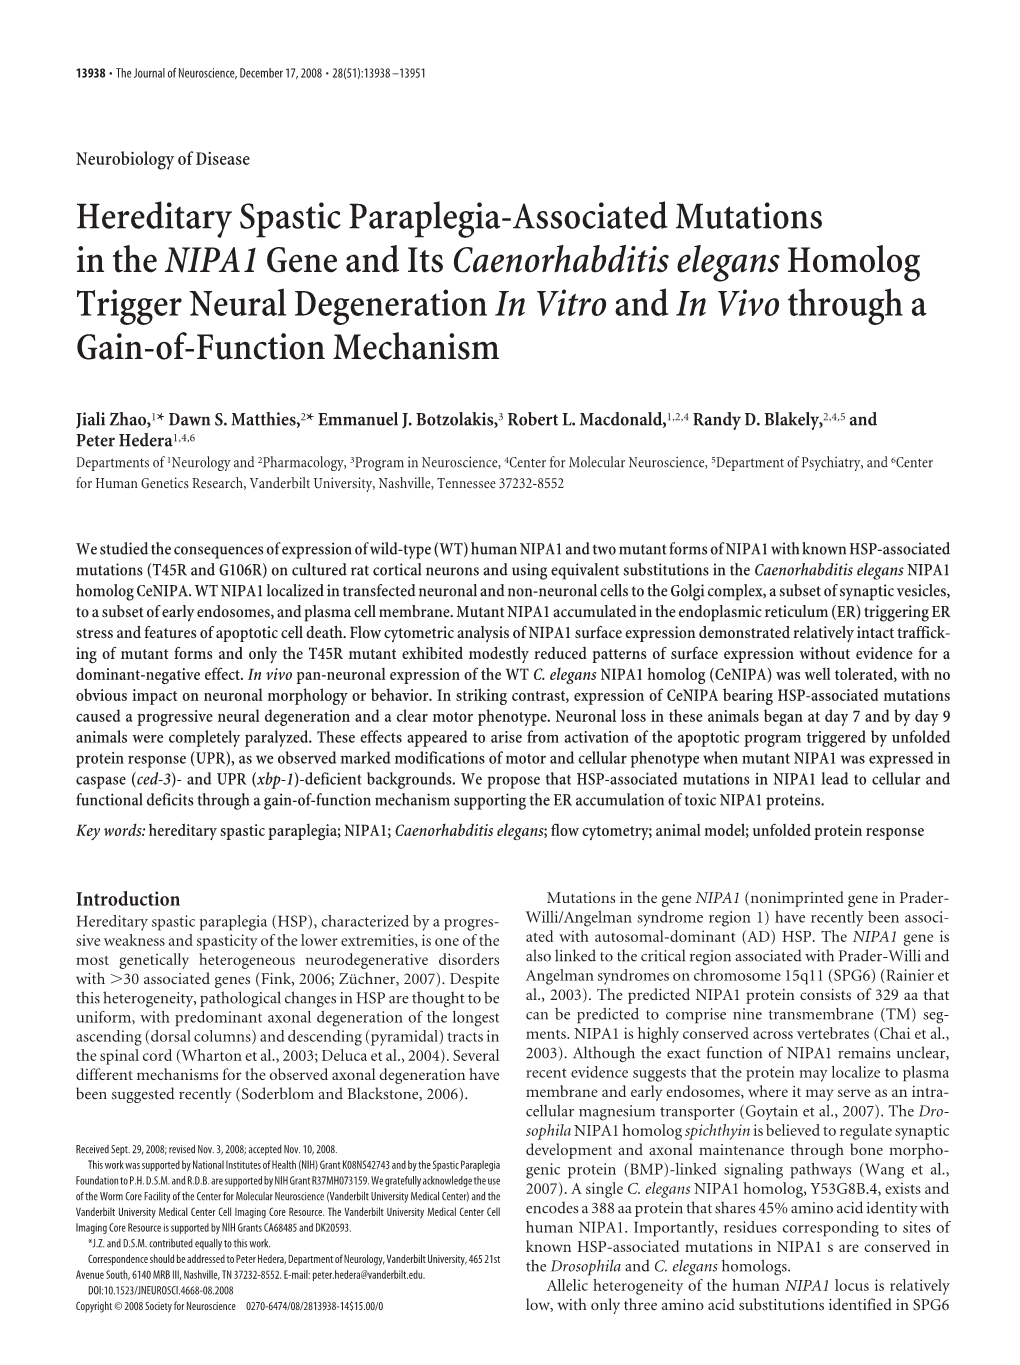 Hereditary Spastic Paraplegia-Associated Mutations In